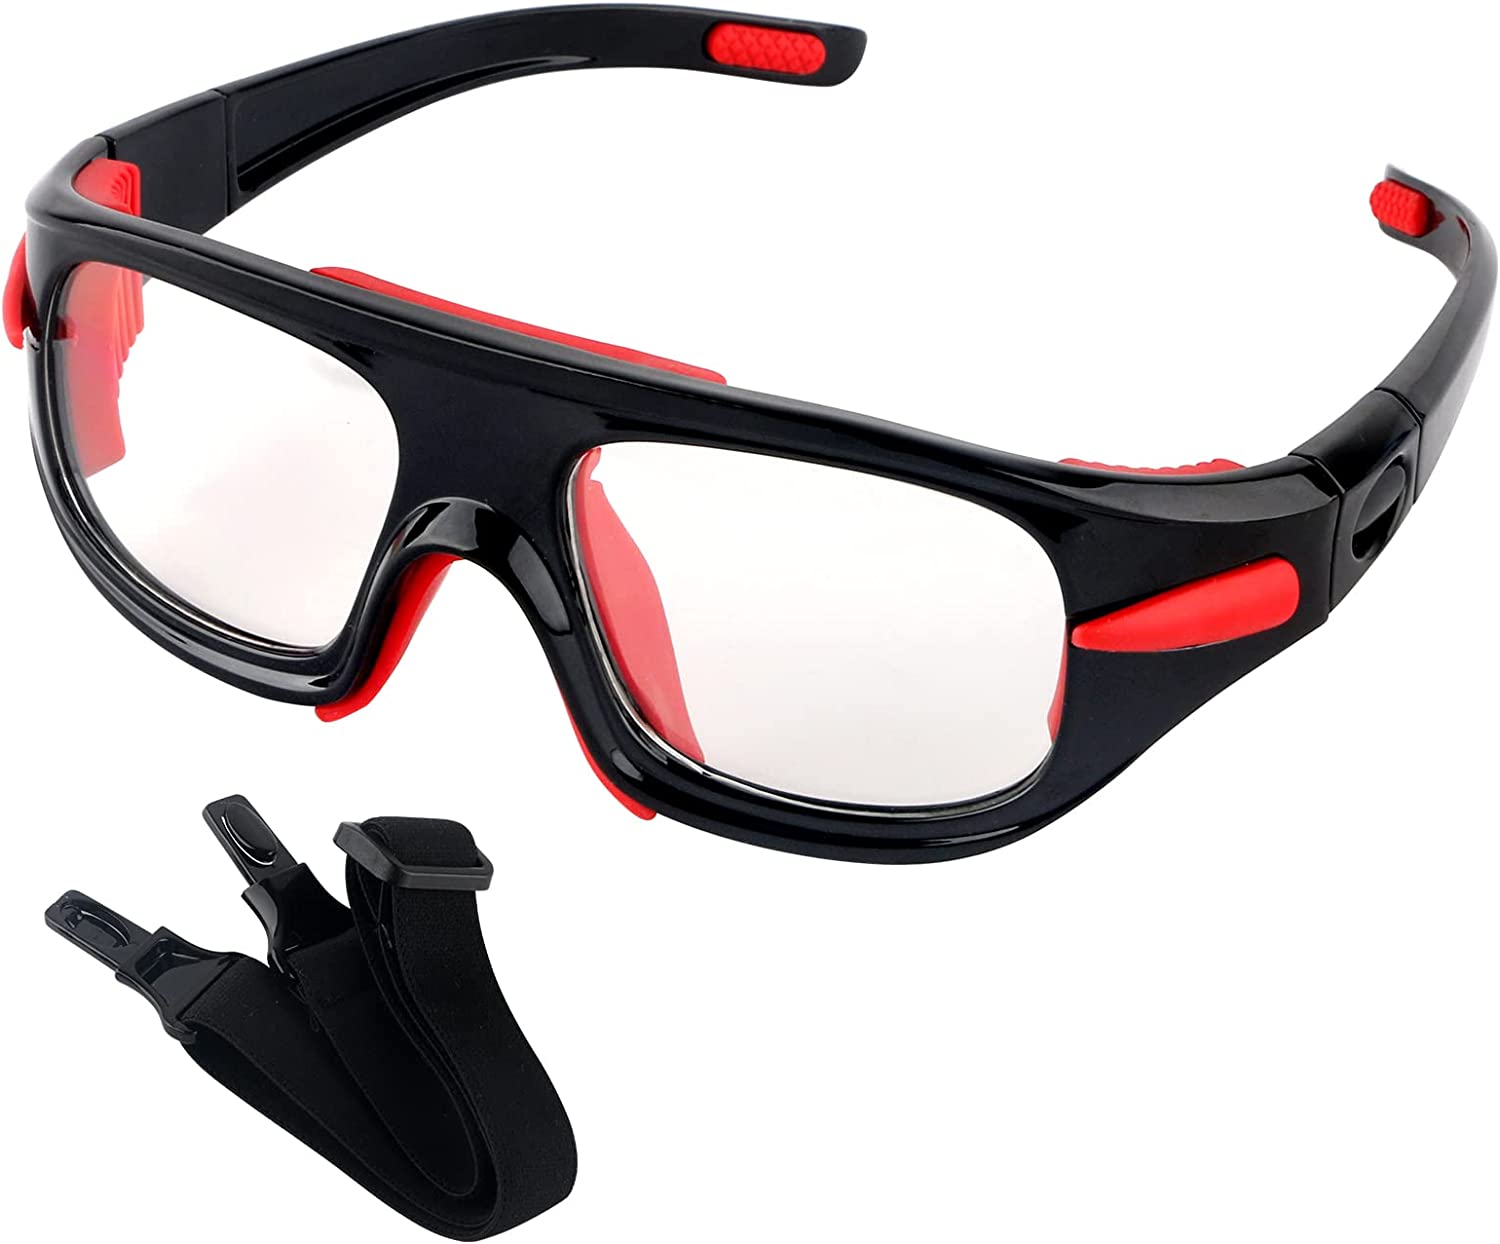 EYESafety Performance Prescription Sports Sunglasses with Adjustable Strap | EYESafety